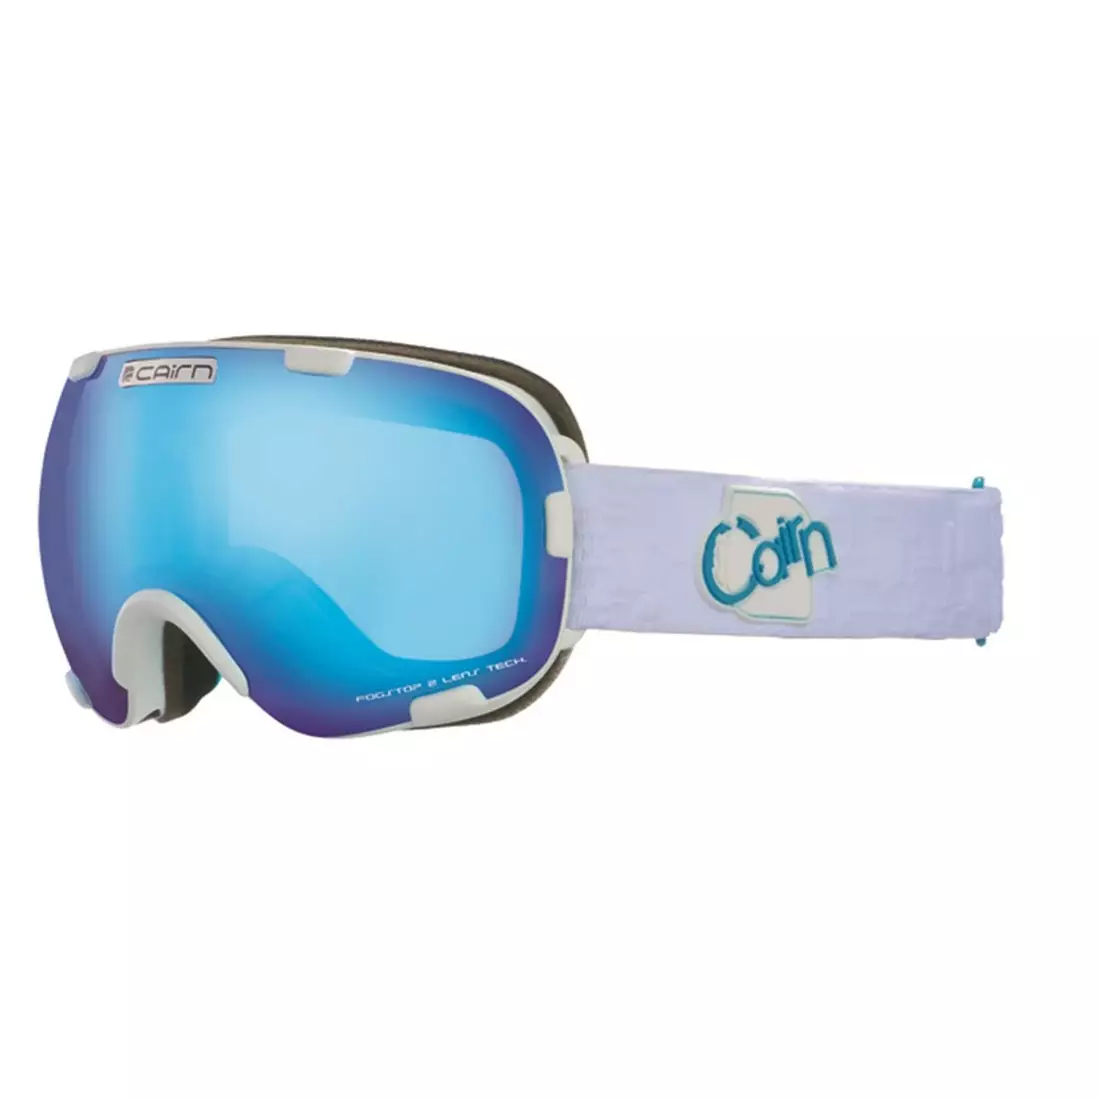 CAIRN lyžařské/snowboardové brýle SPIRIT light blue 5806818201